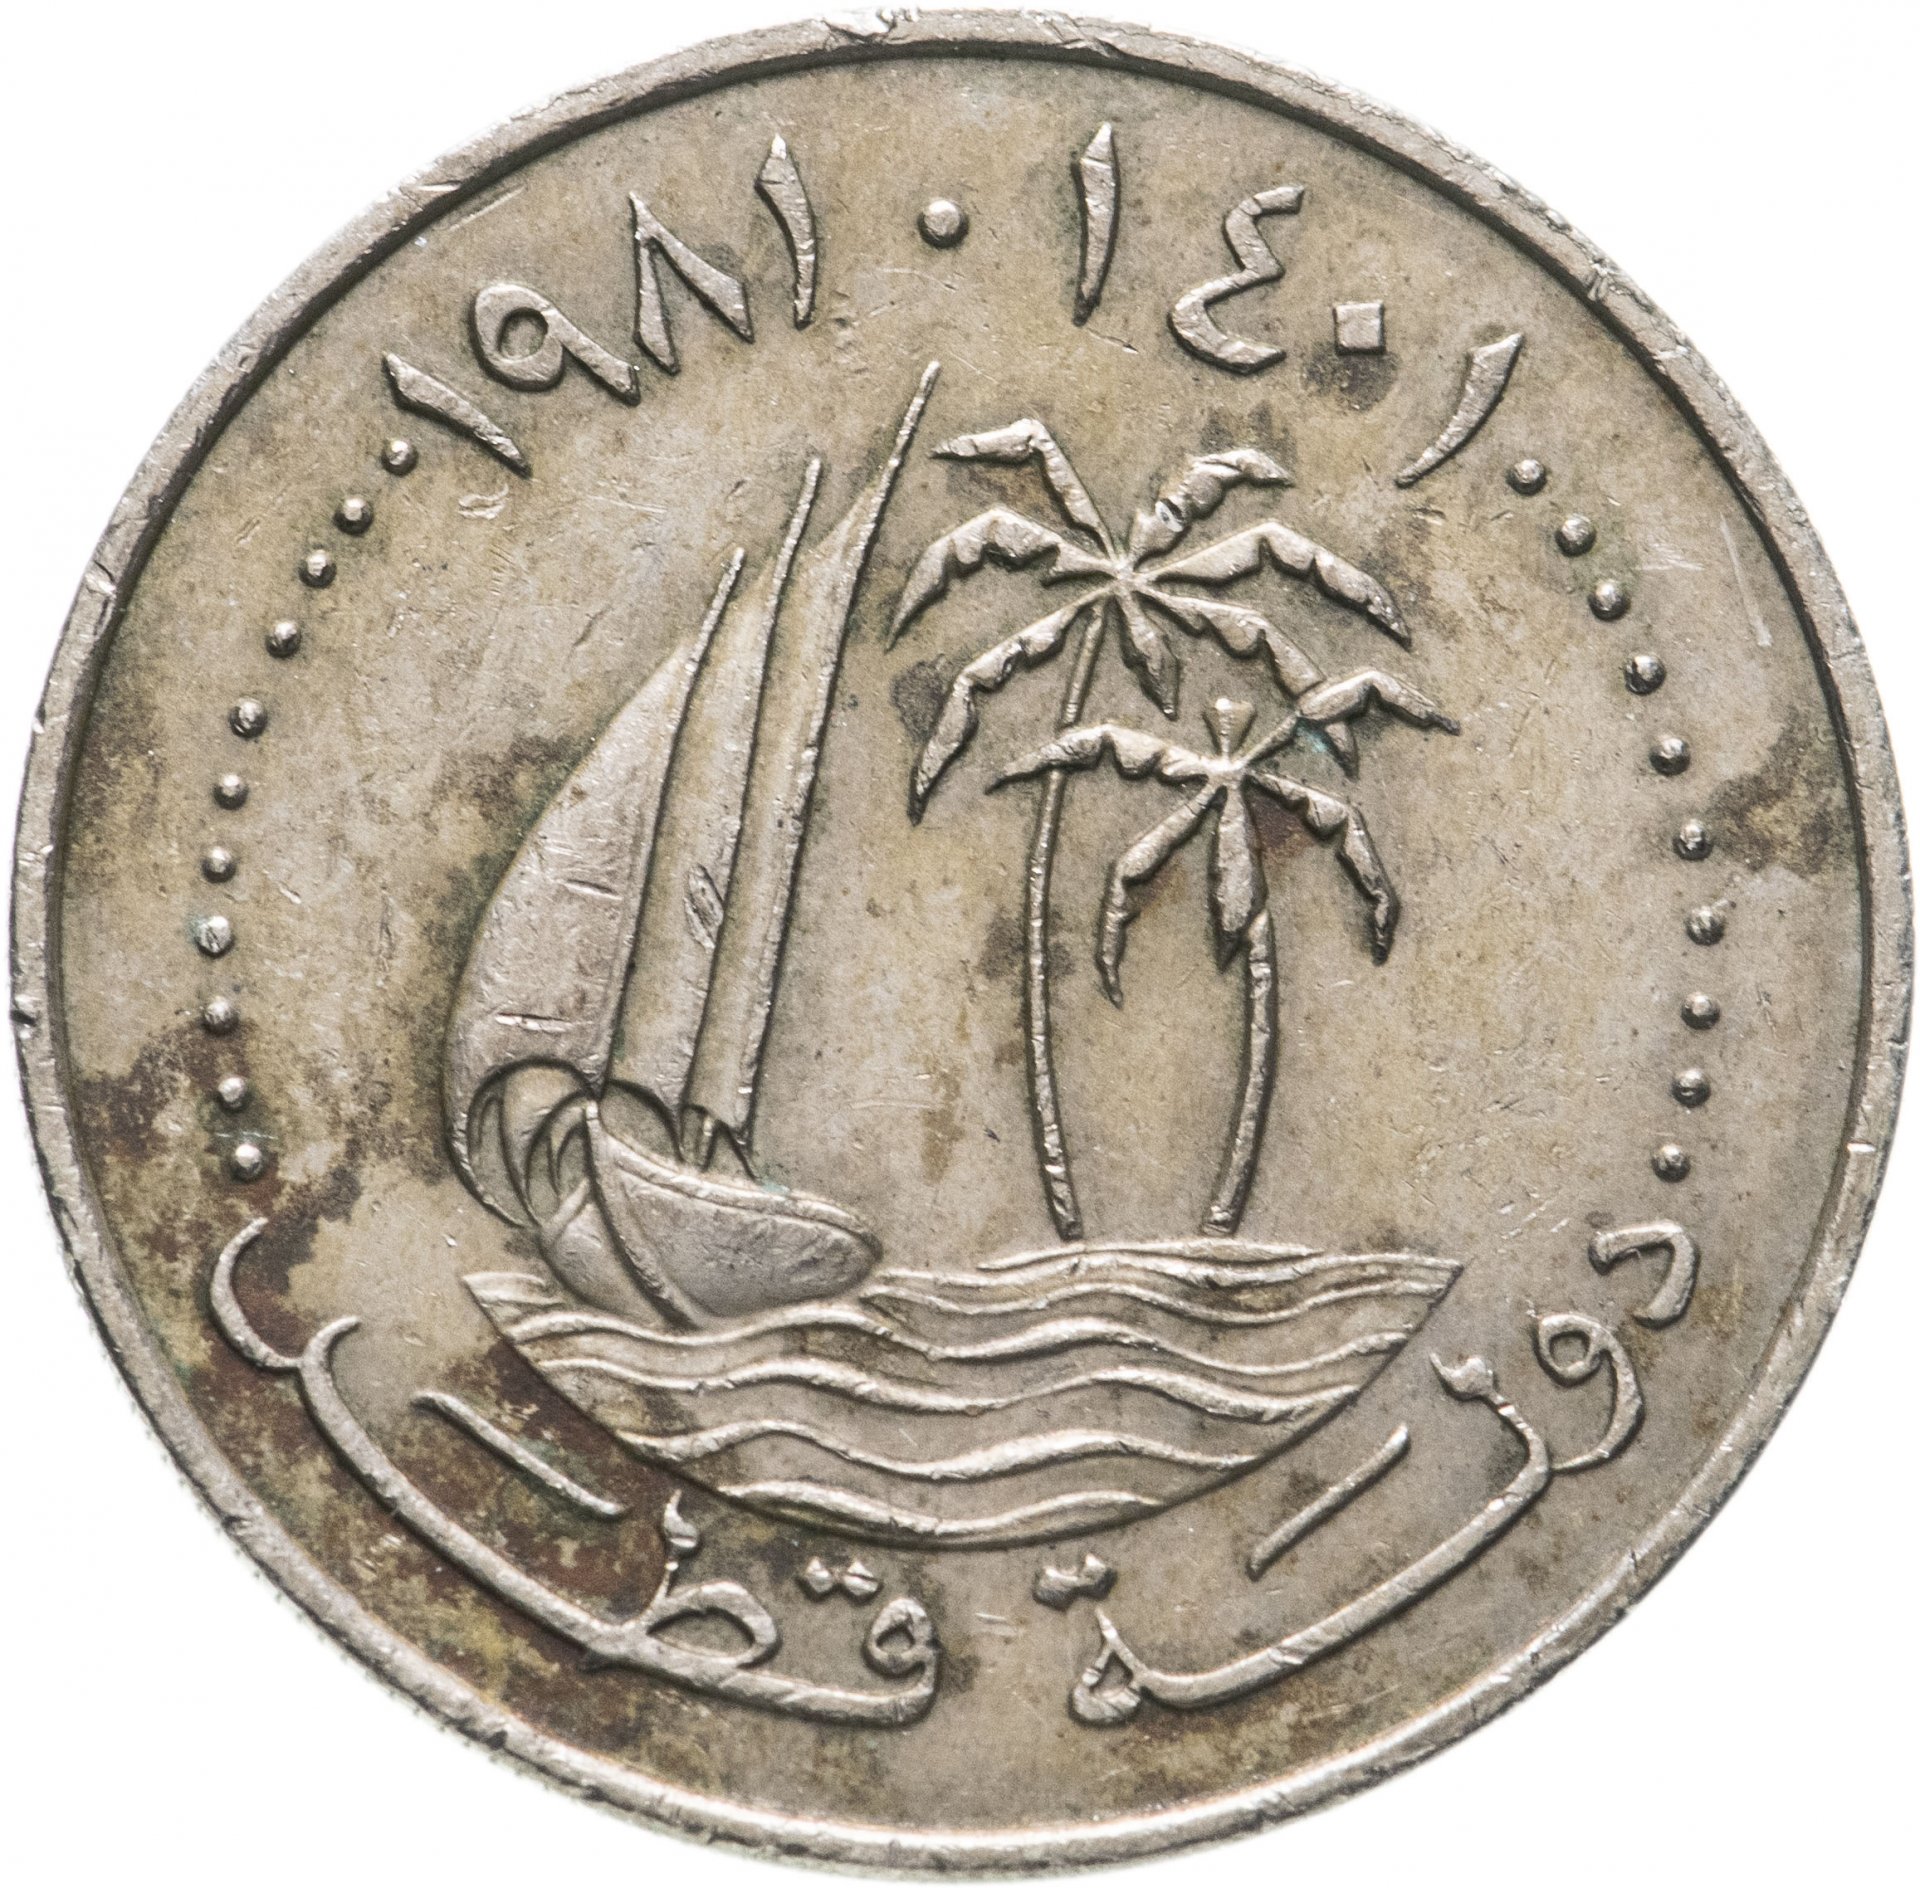 16 дирхам. Арабские монеты. Монеты Катара. Дирхамы монеты. Арабская монета 50.